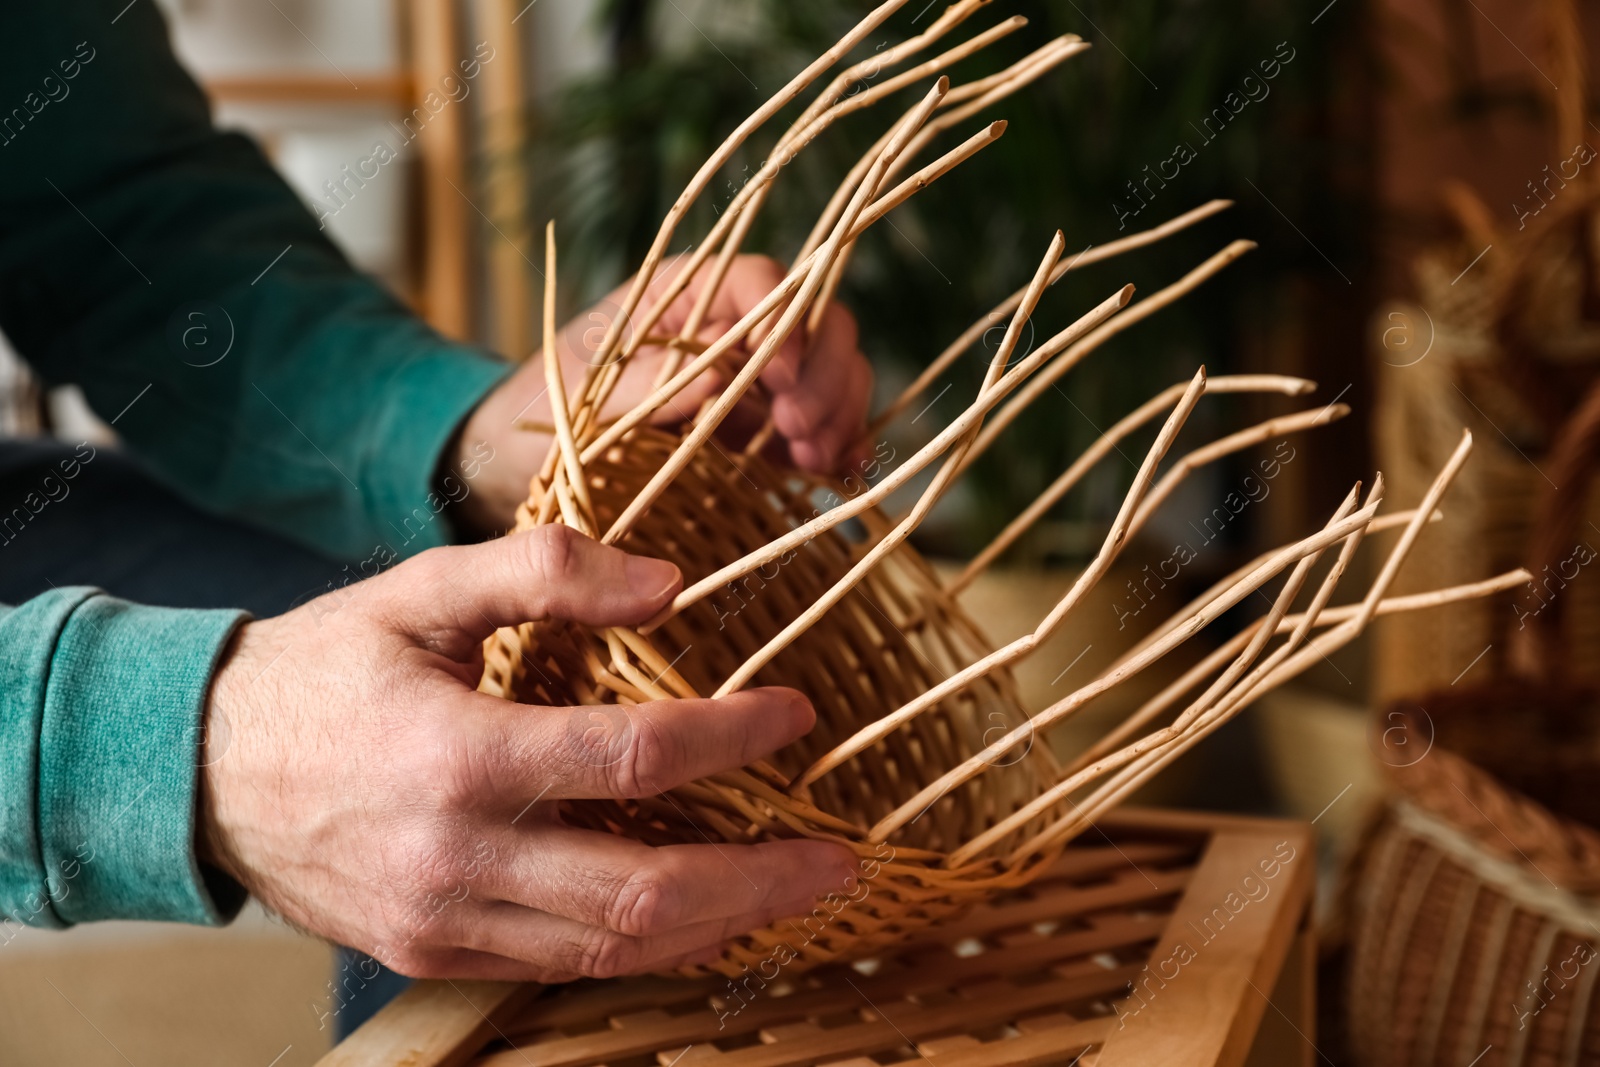 Photo of Man weaving wicker basket indoors, closeup view